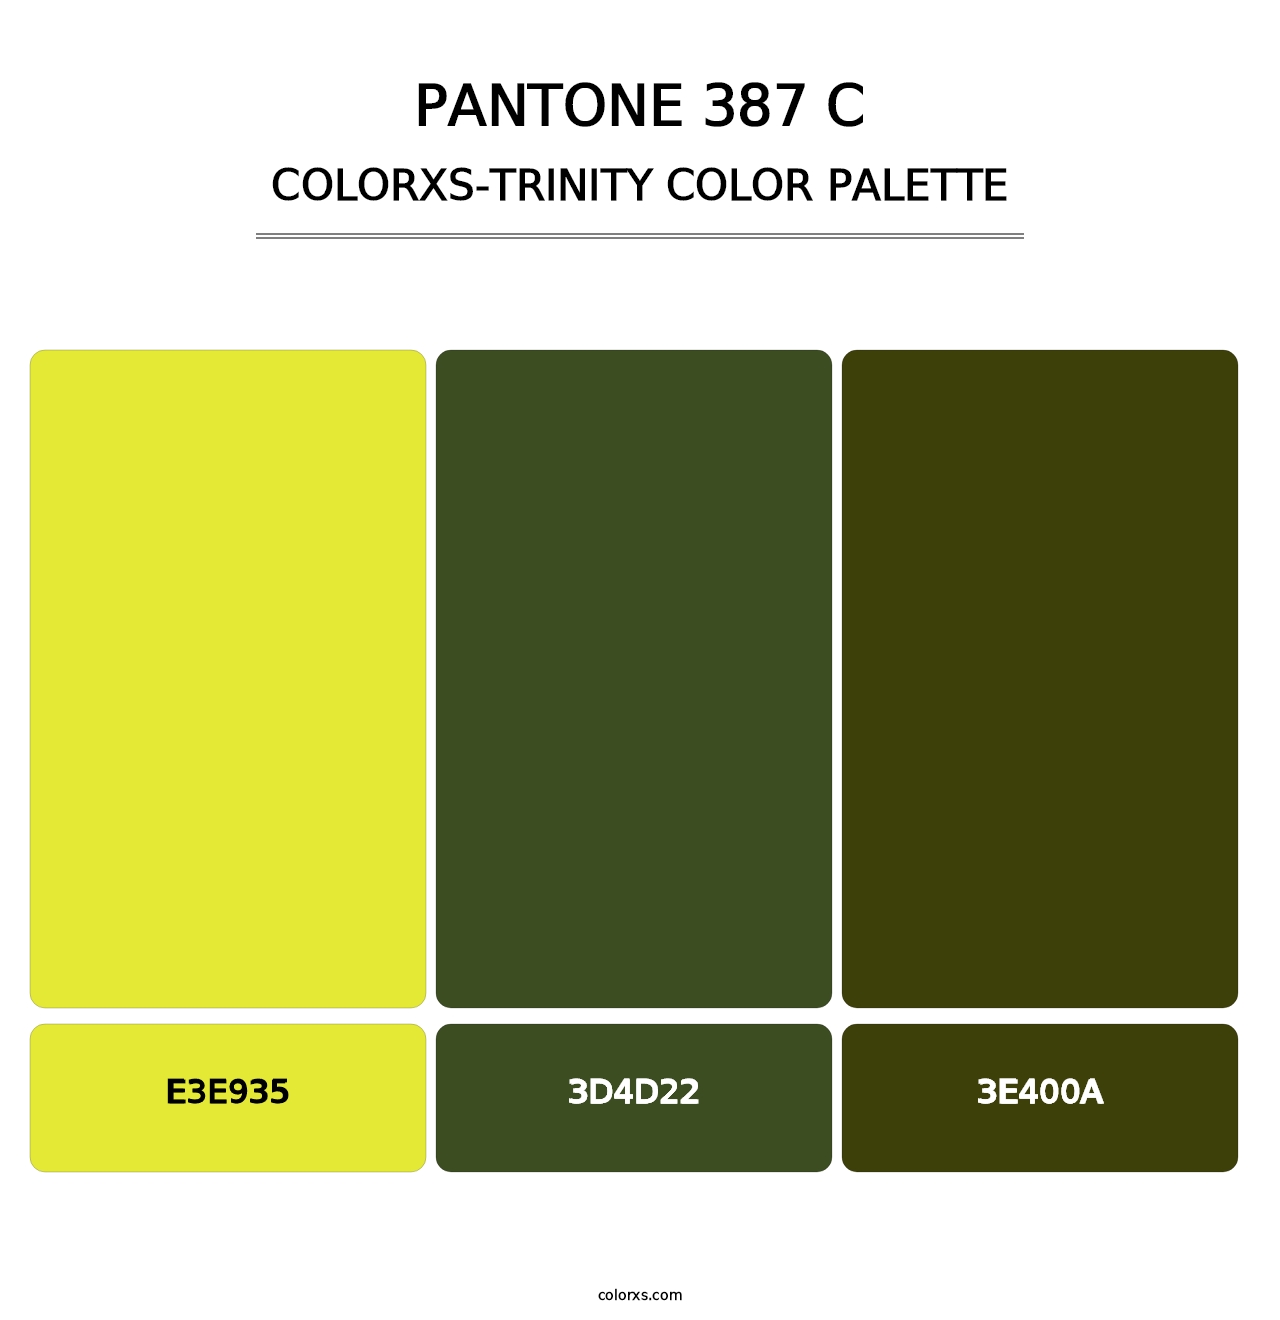 PANTONE 387 C - Colorxs Trinity Palette